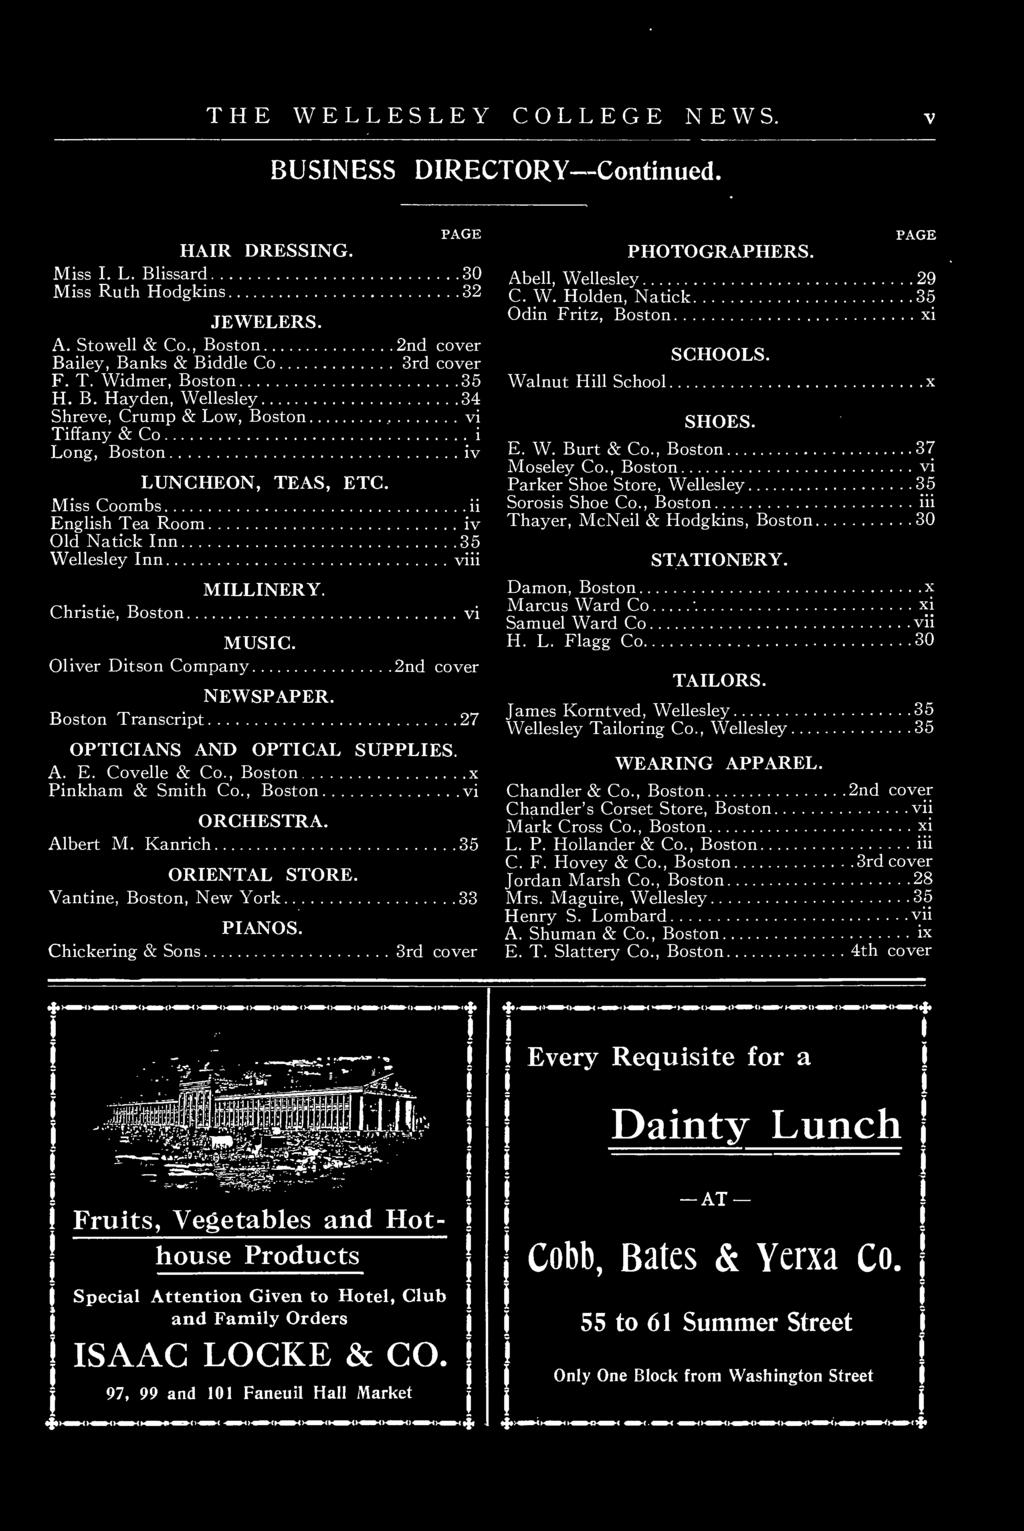 Mss Coombs Englsh Tea Room v Old Natck Inn 35 Wellesley Inn v Chrste, Boston MILLINERY. MUSIC. Olver Dtson Company v 2nd cover NEWSPAPER. Boston Transcrpt 27 OPTICIANS AND OPTICAL SUPPLIES. A. E. Covelle & Co.